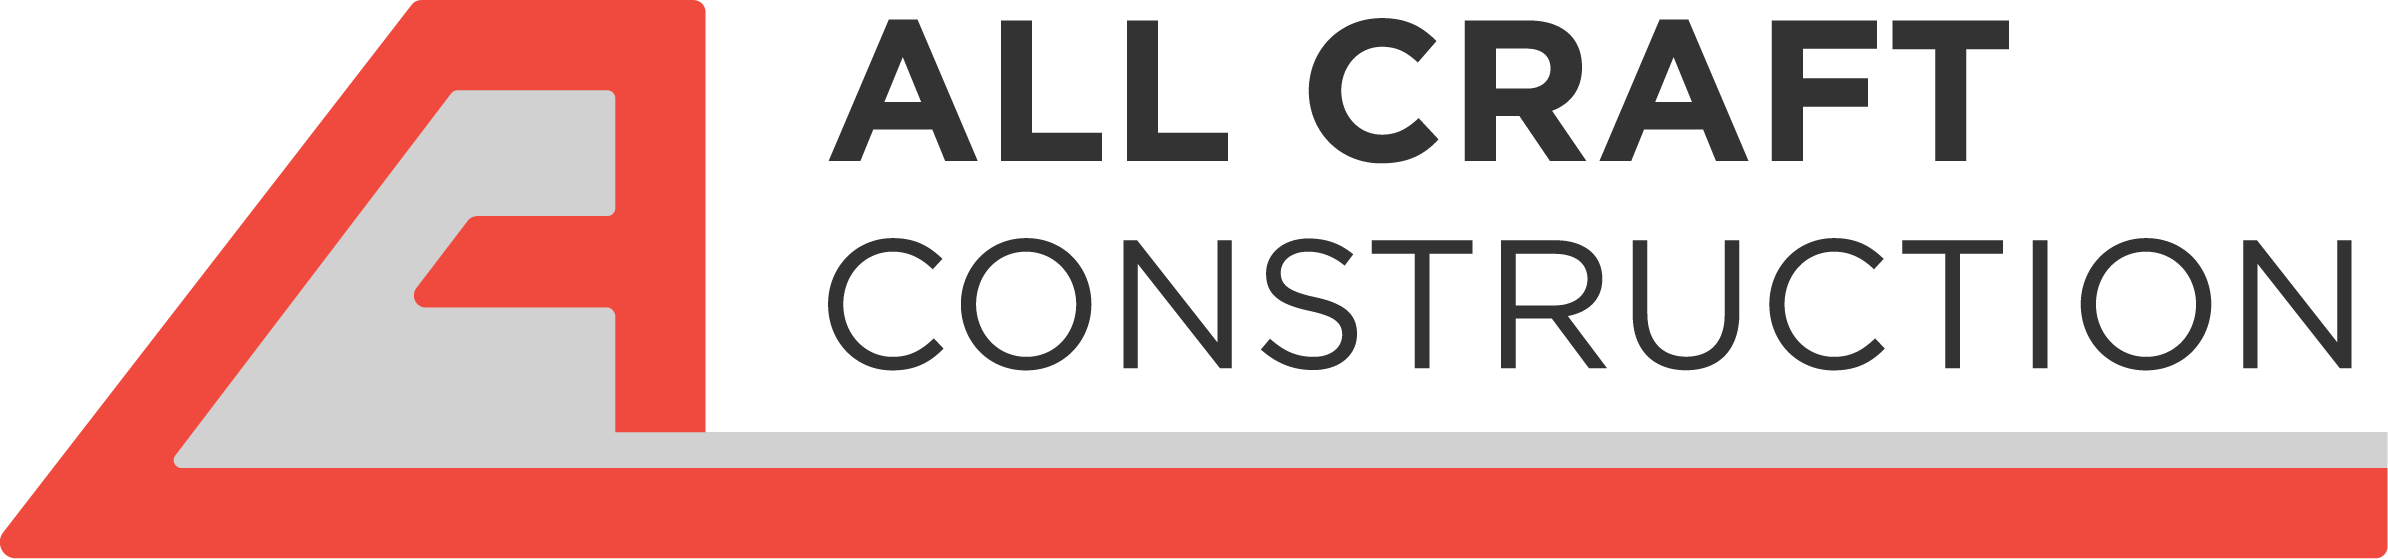 All Craft Construction Logo